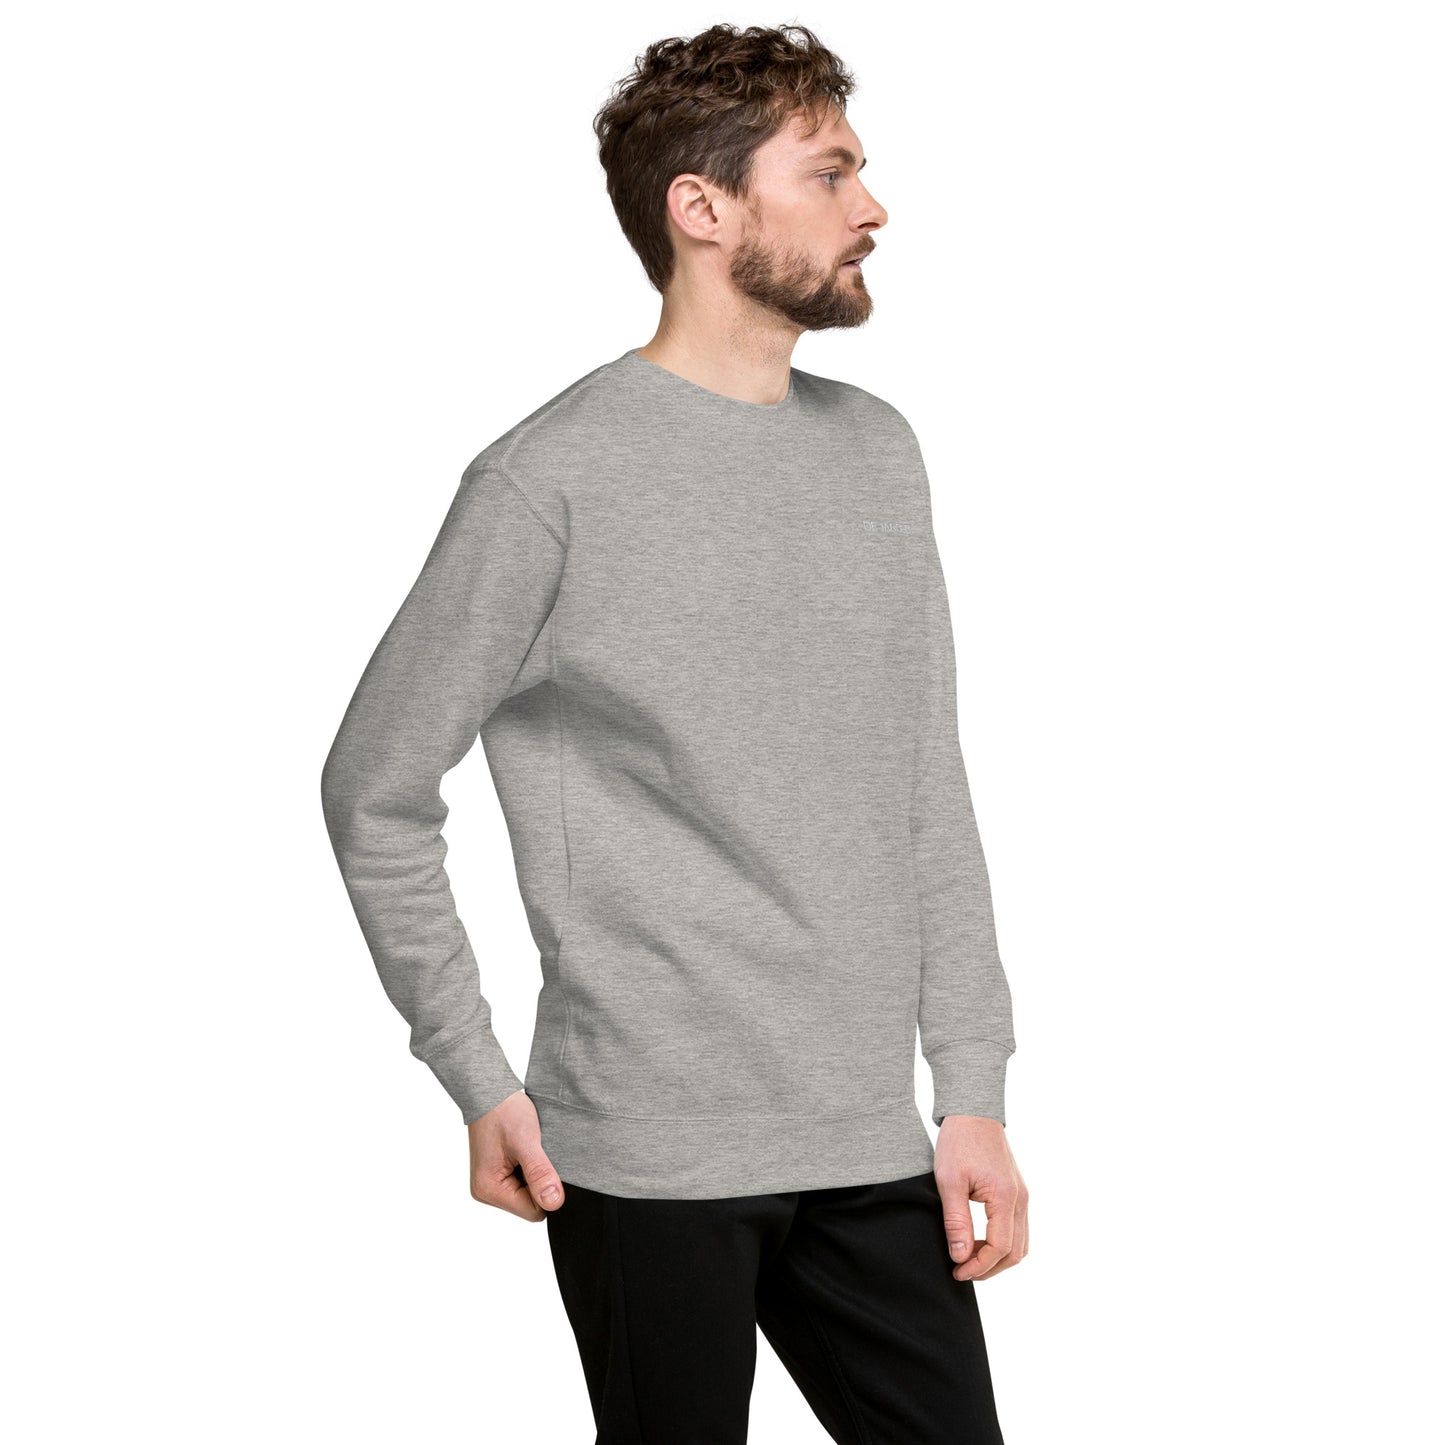 De Janoud - Premium Sweater